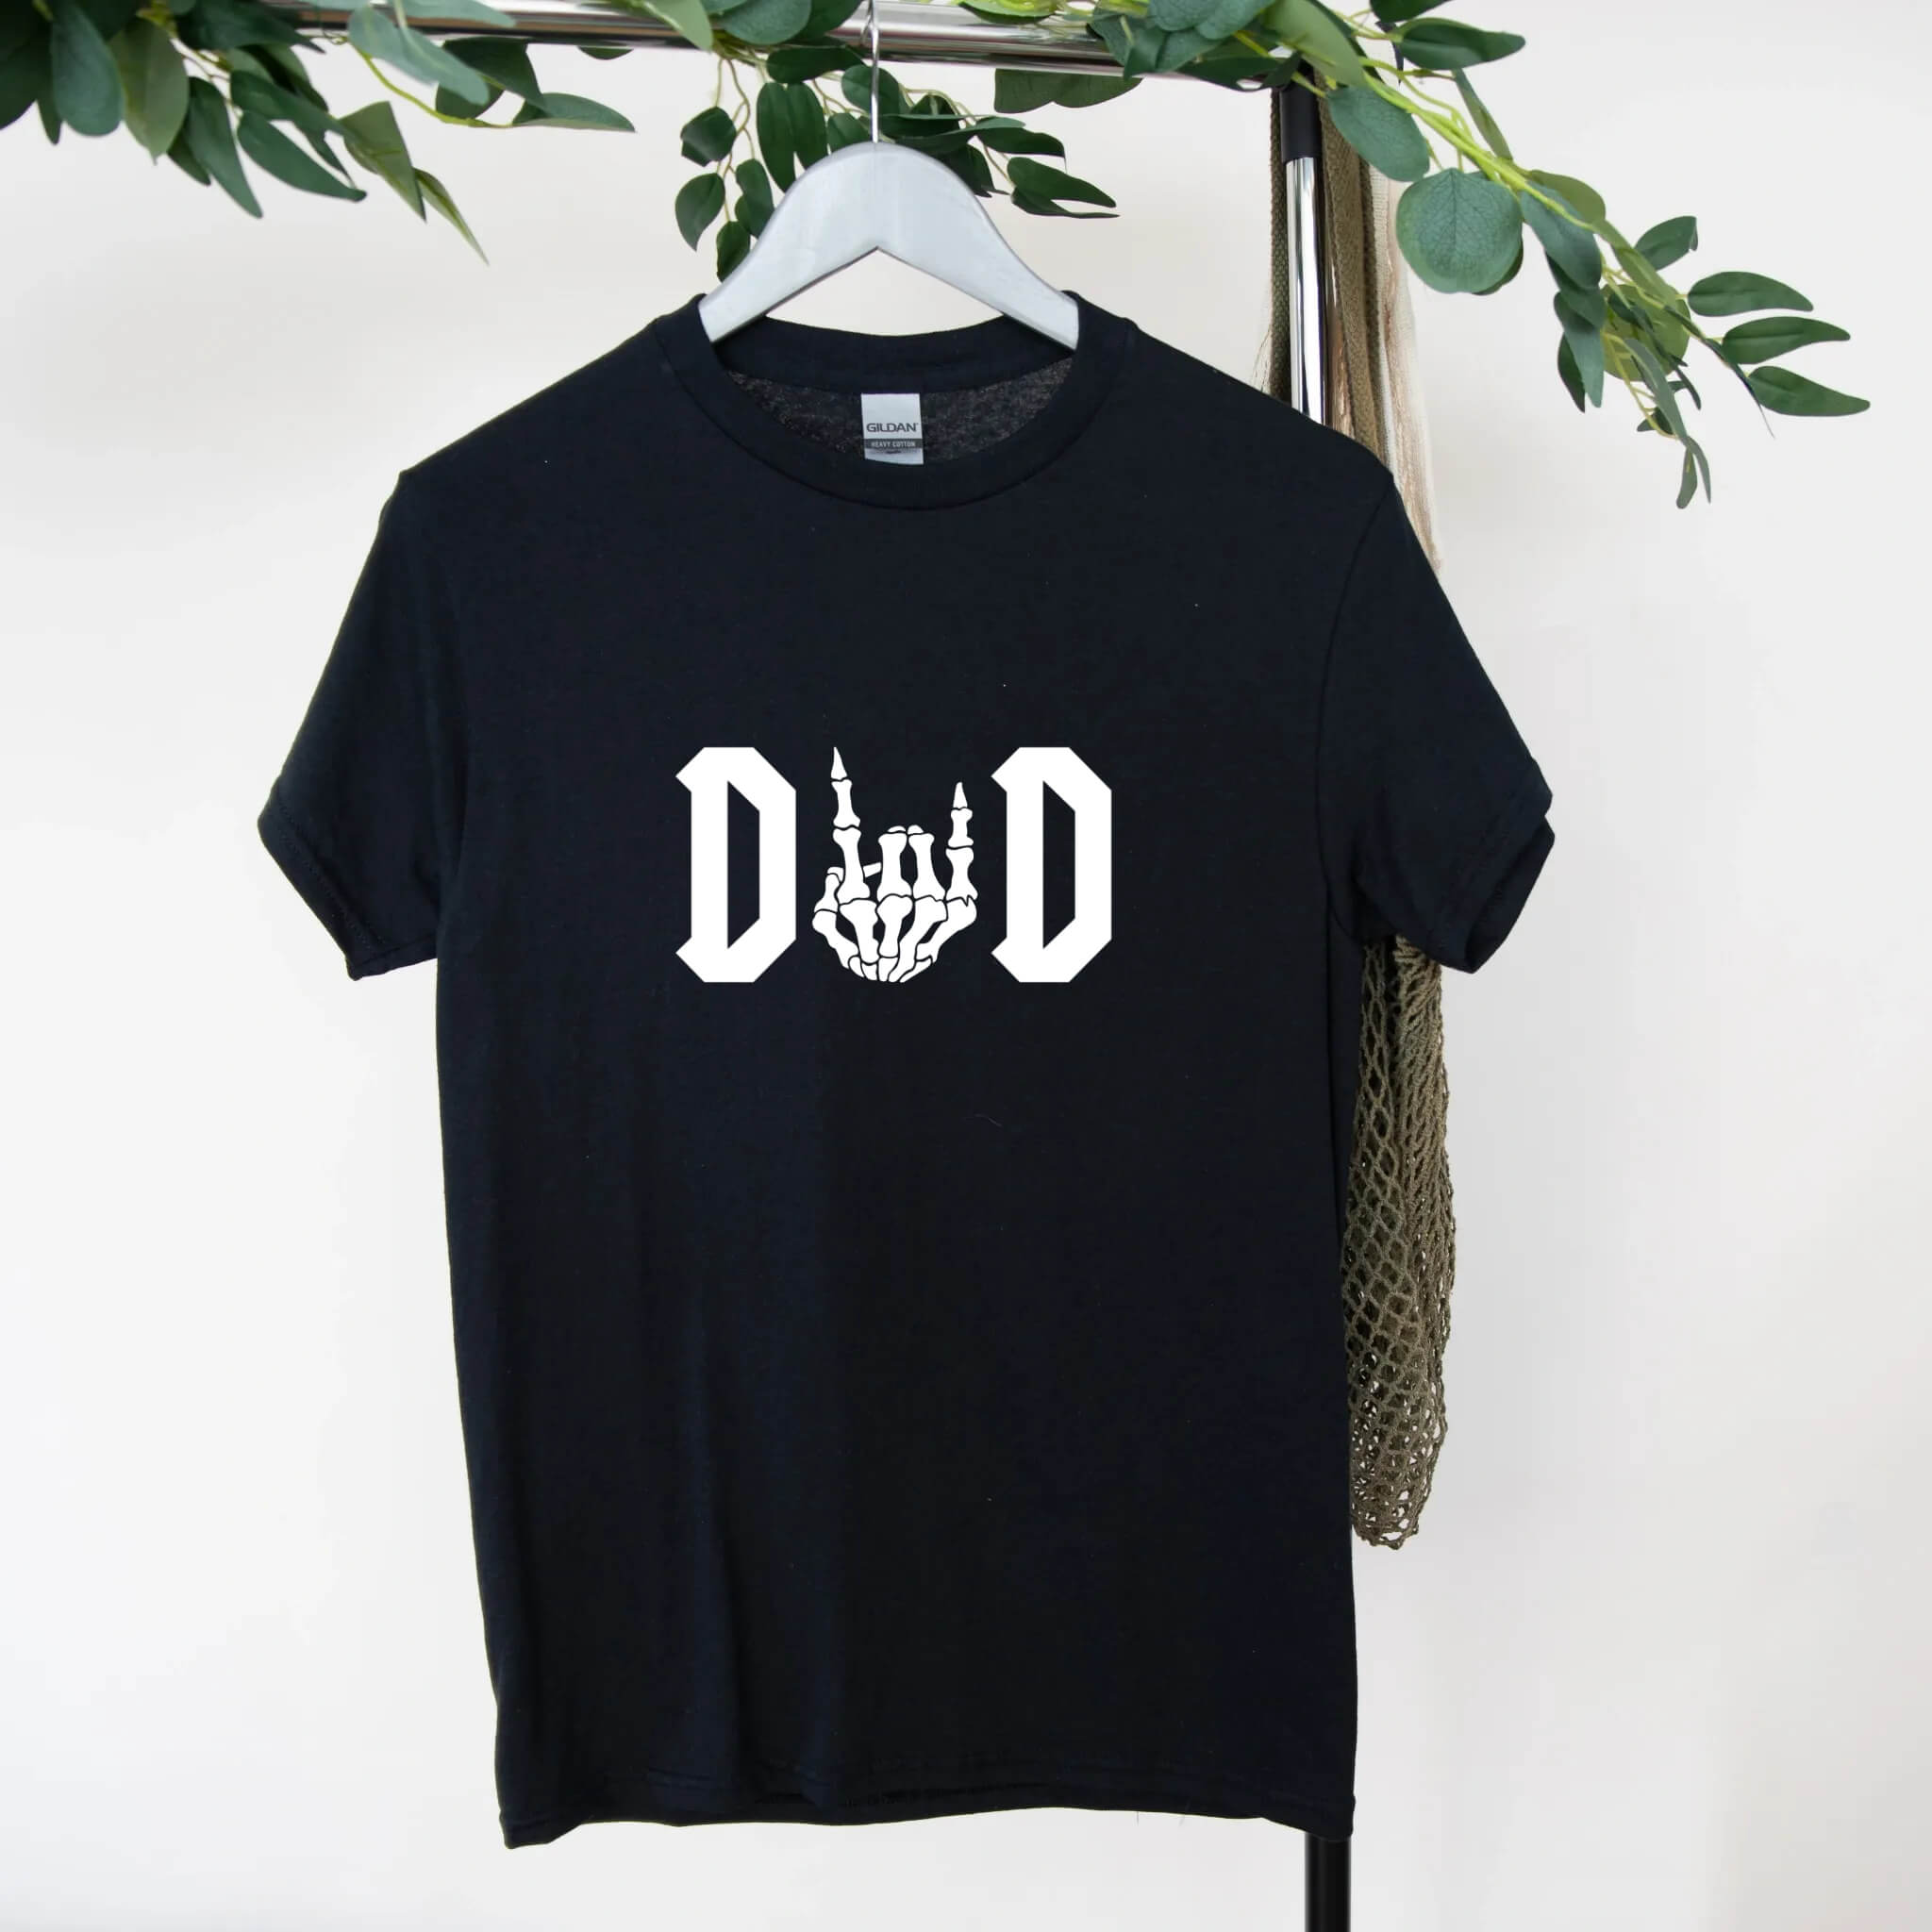 Rocker Dad Skelton Hand Men's Graphic Print T-Shirt